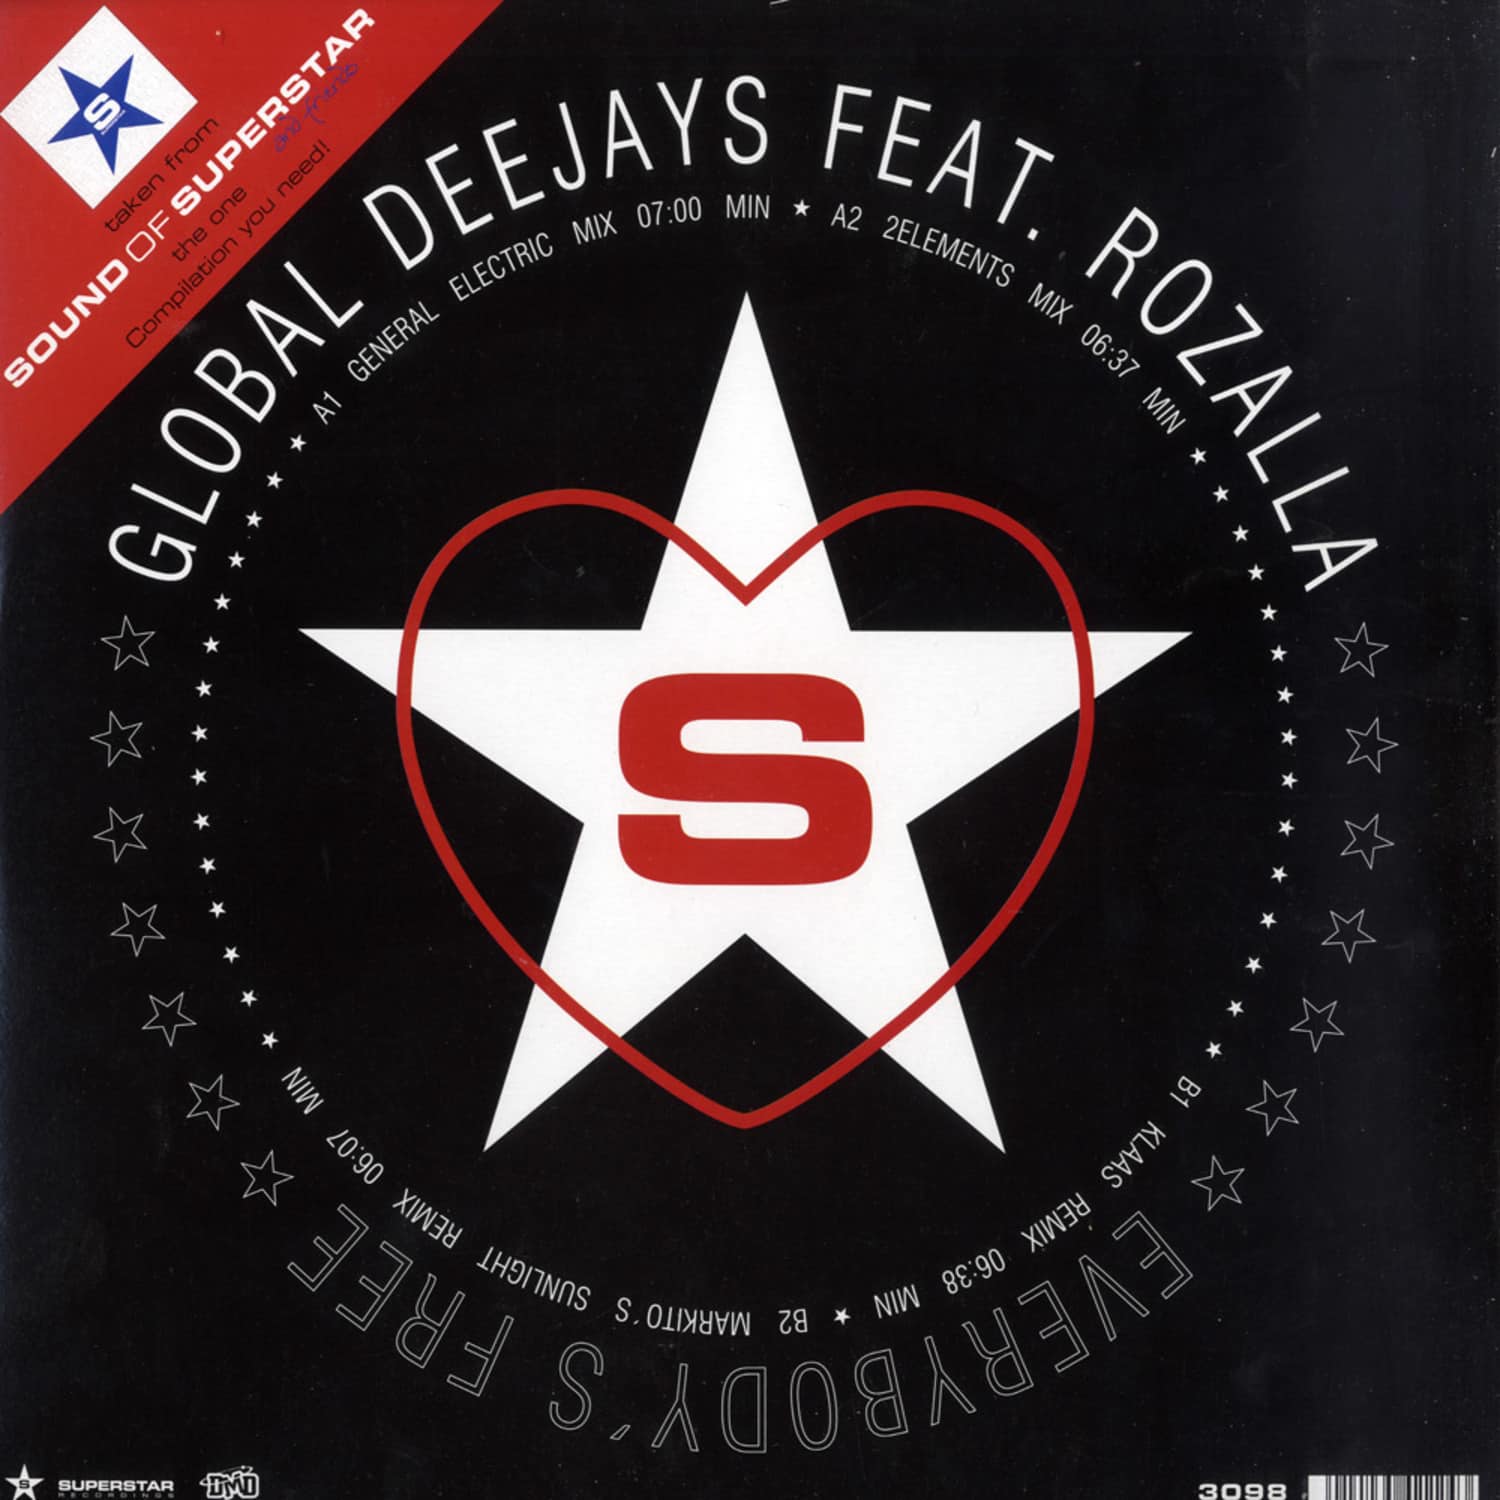 Global Deejays feat. Rozalla - EVERYBODY S FREE